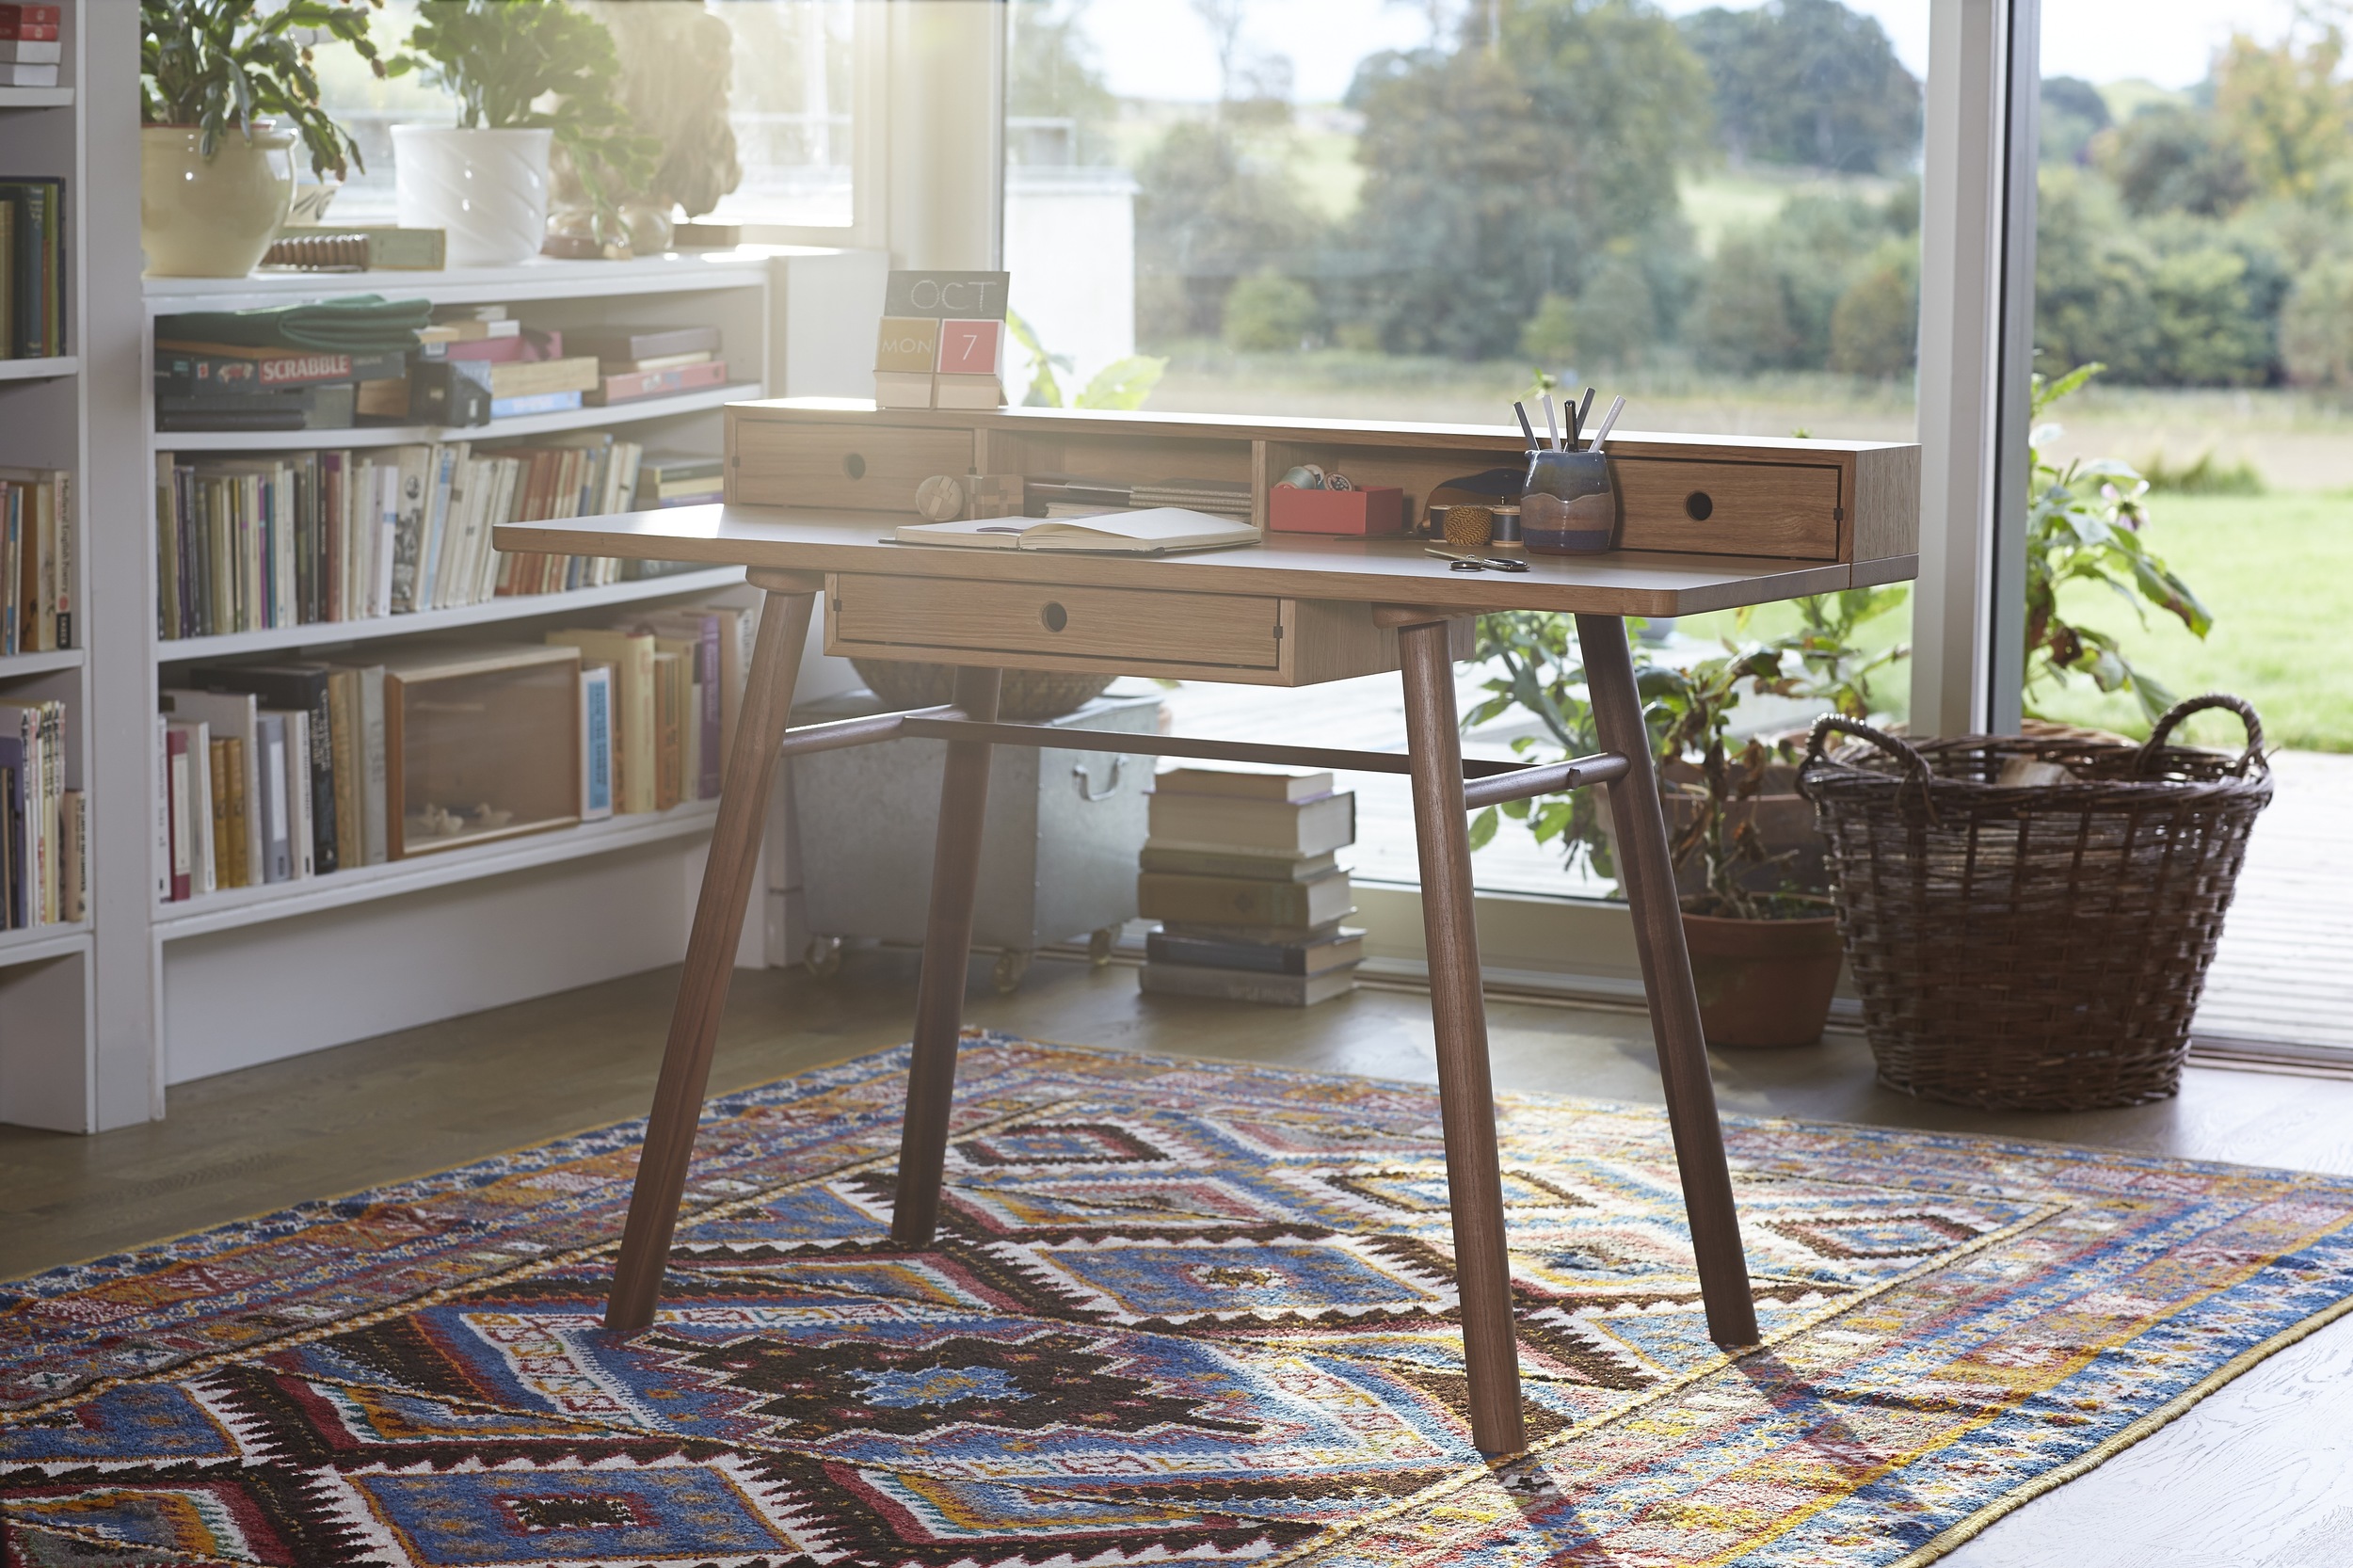 Bespoke desk by Namon Gaston furniture maker and designer